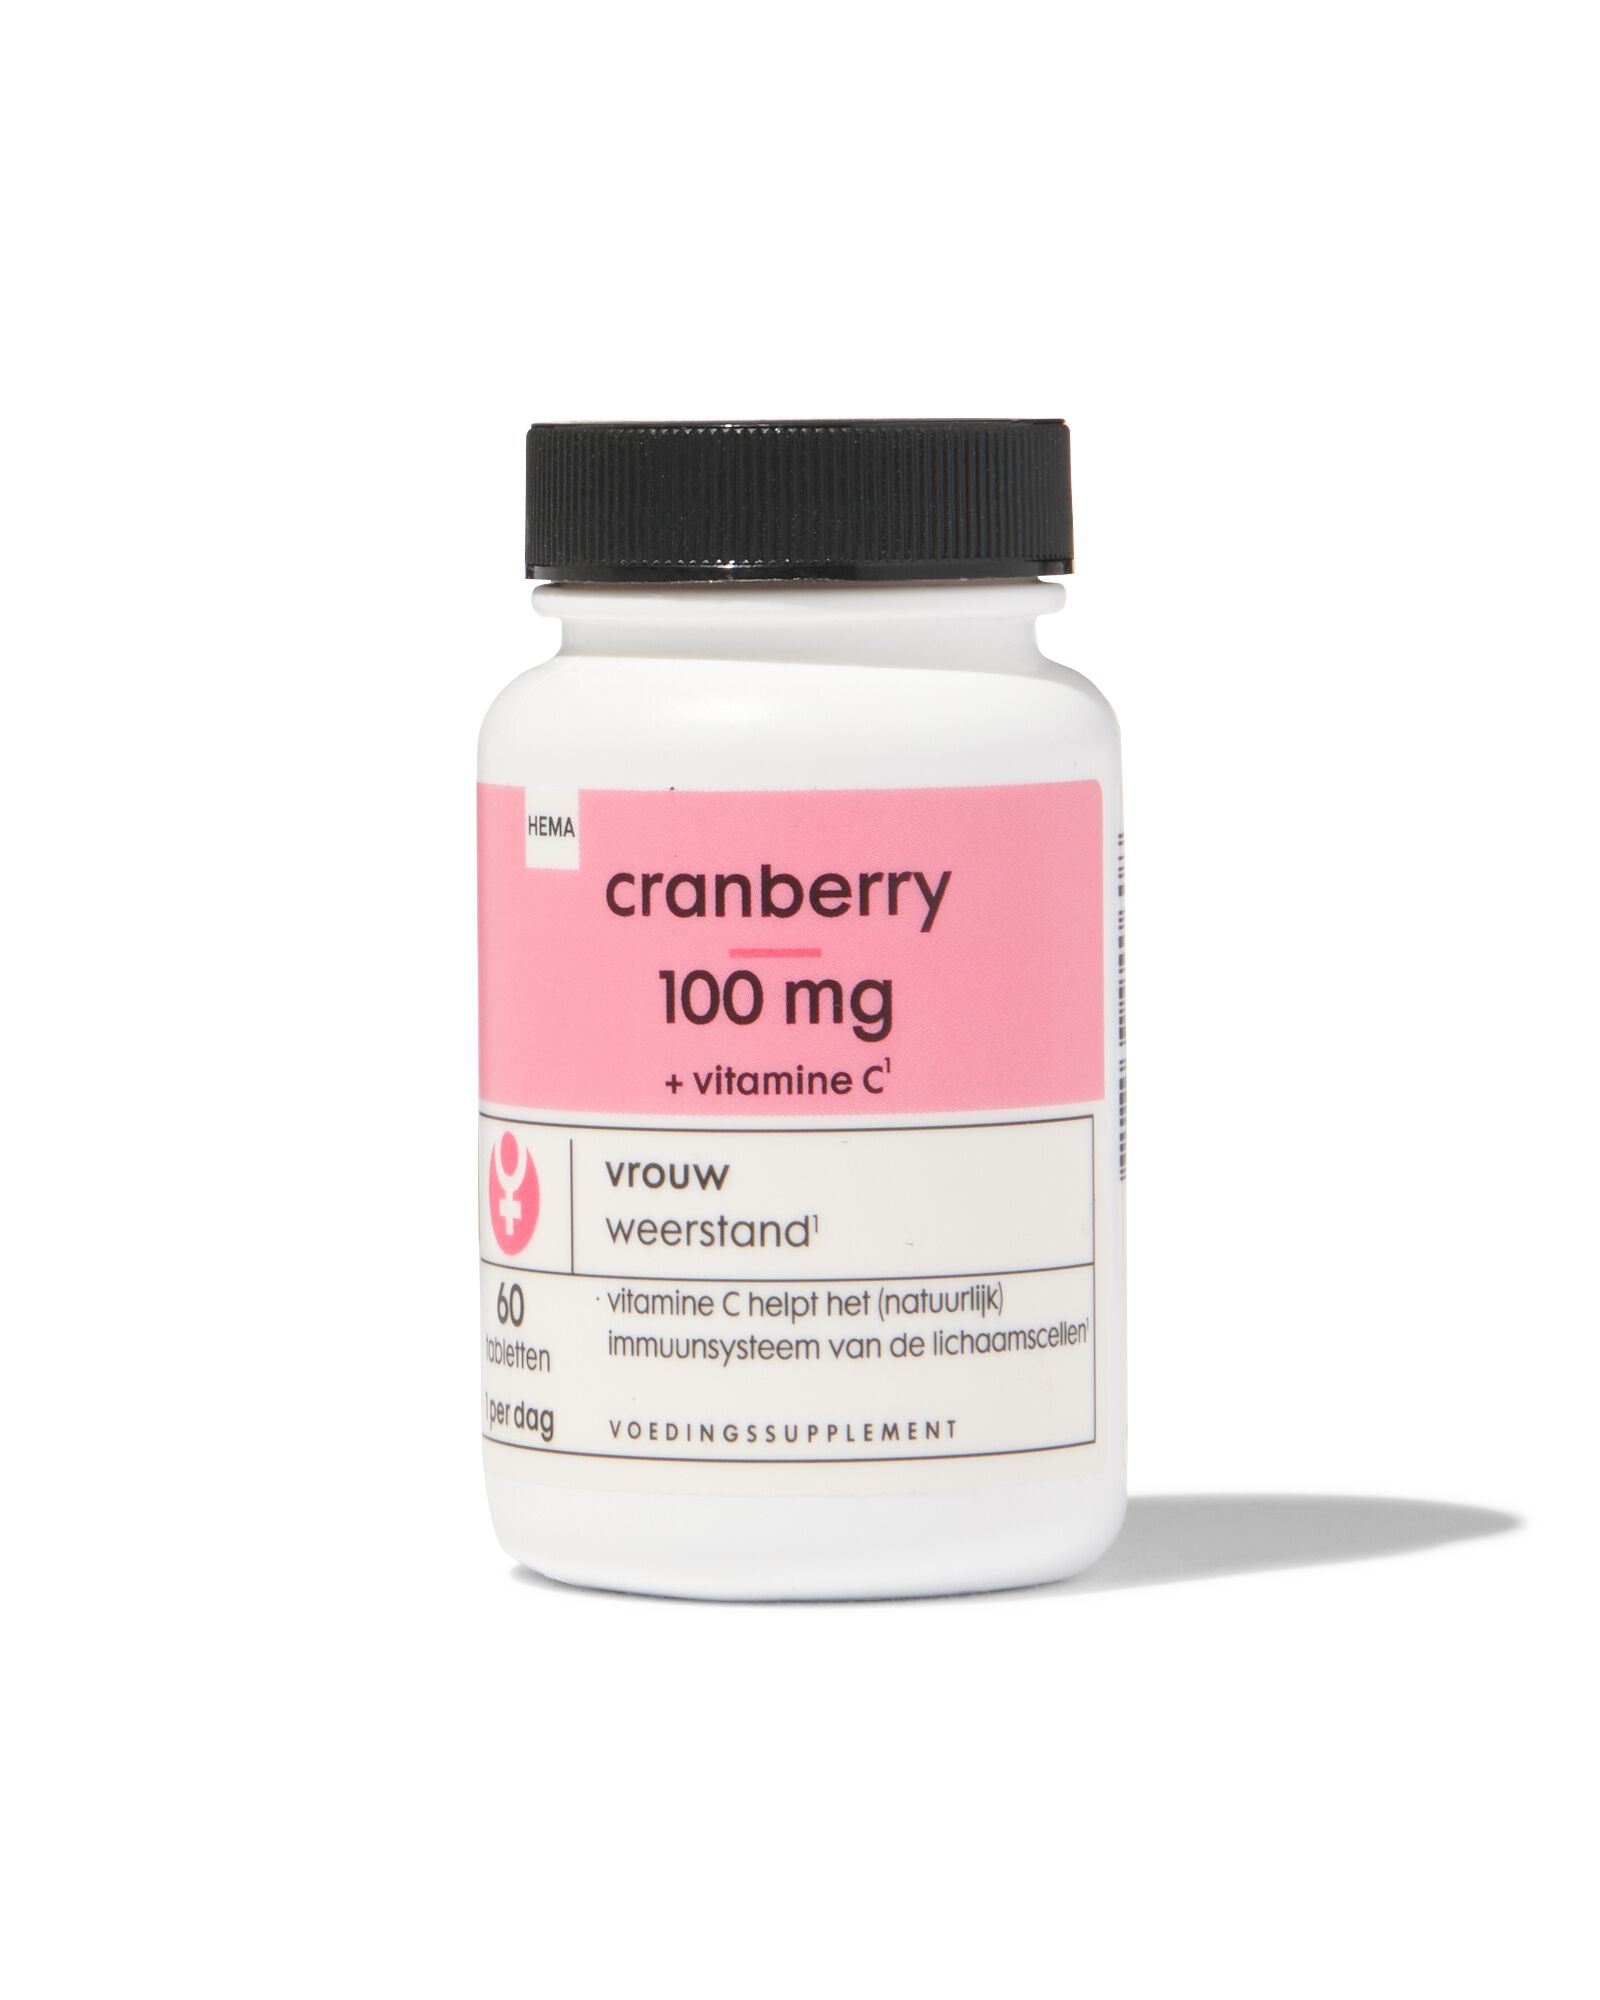 cranberry 100mg + vitamine C - 60 stuks - 11402206 - HEMA